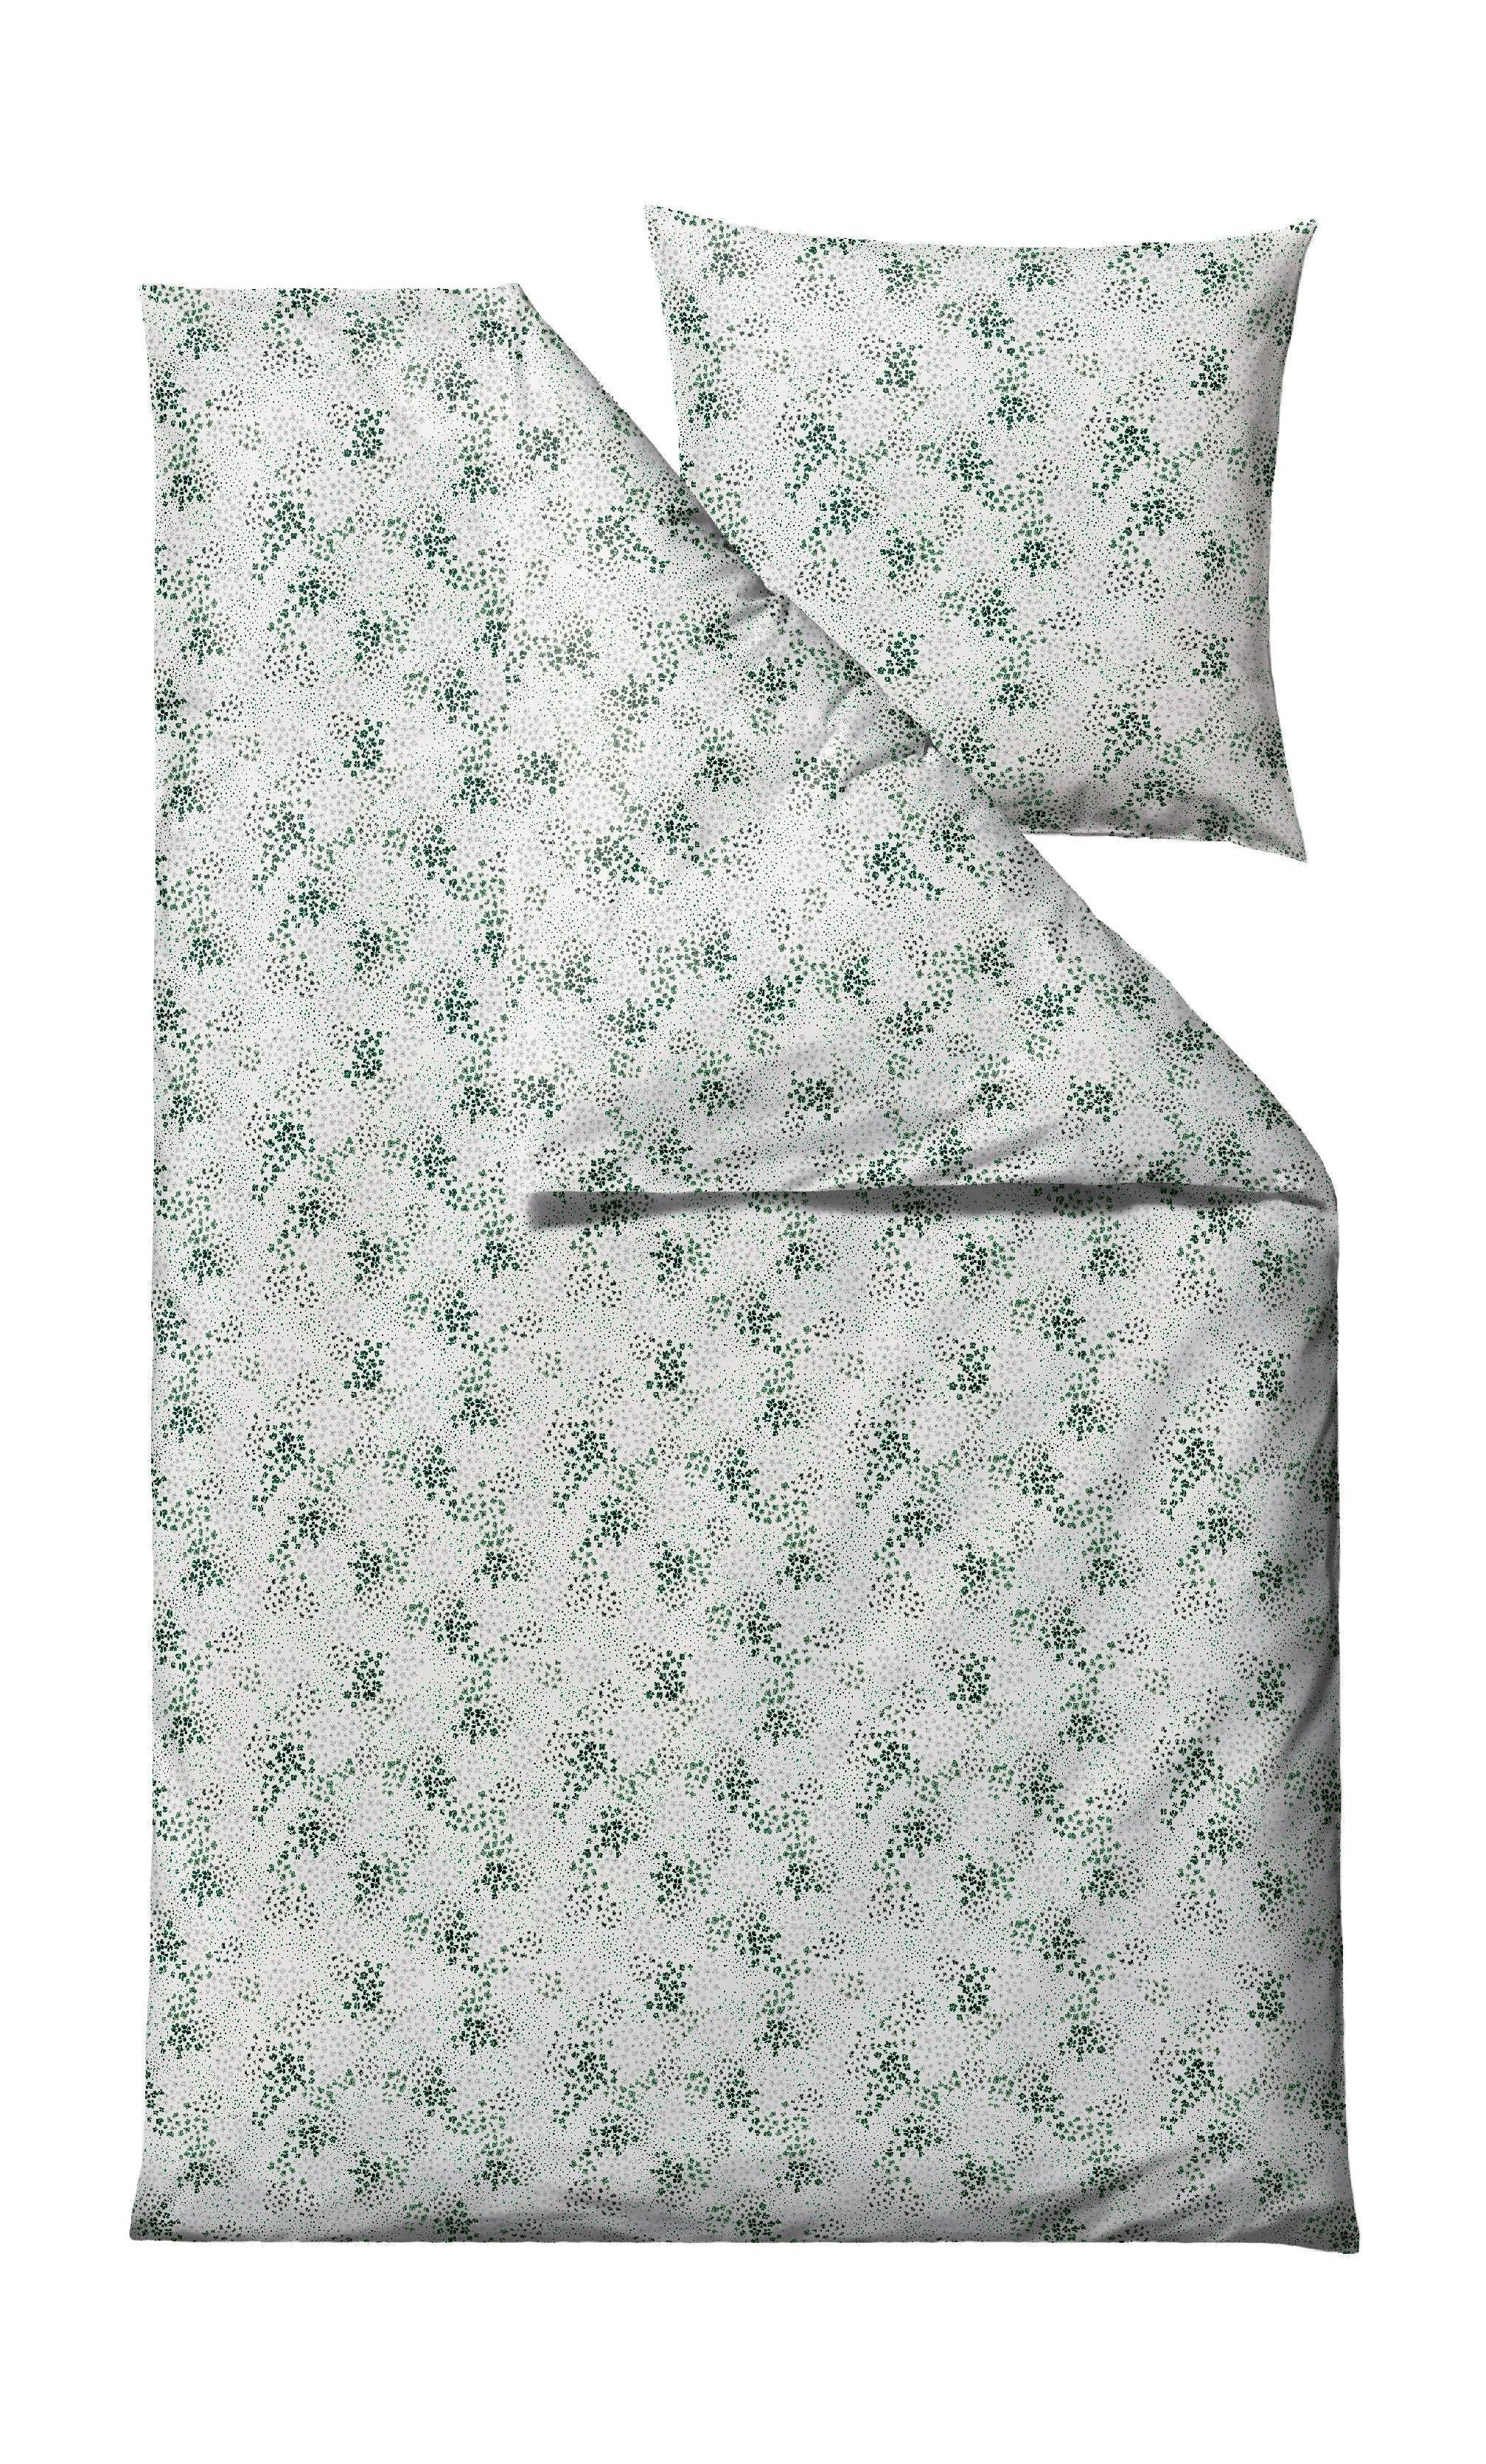 Lin lin de lit södahl alto 140 x 220 cm, vert